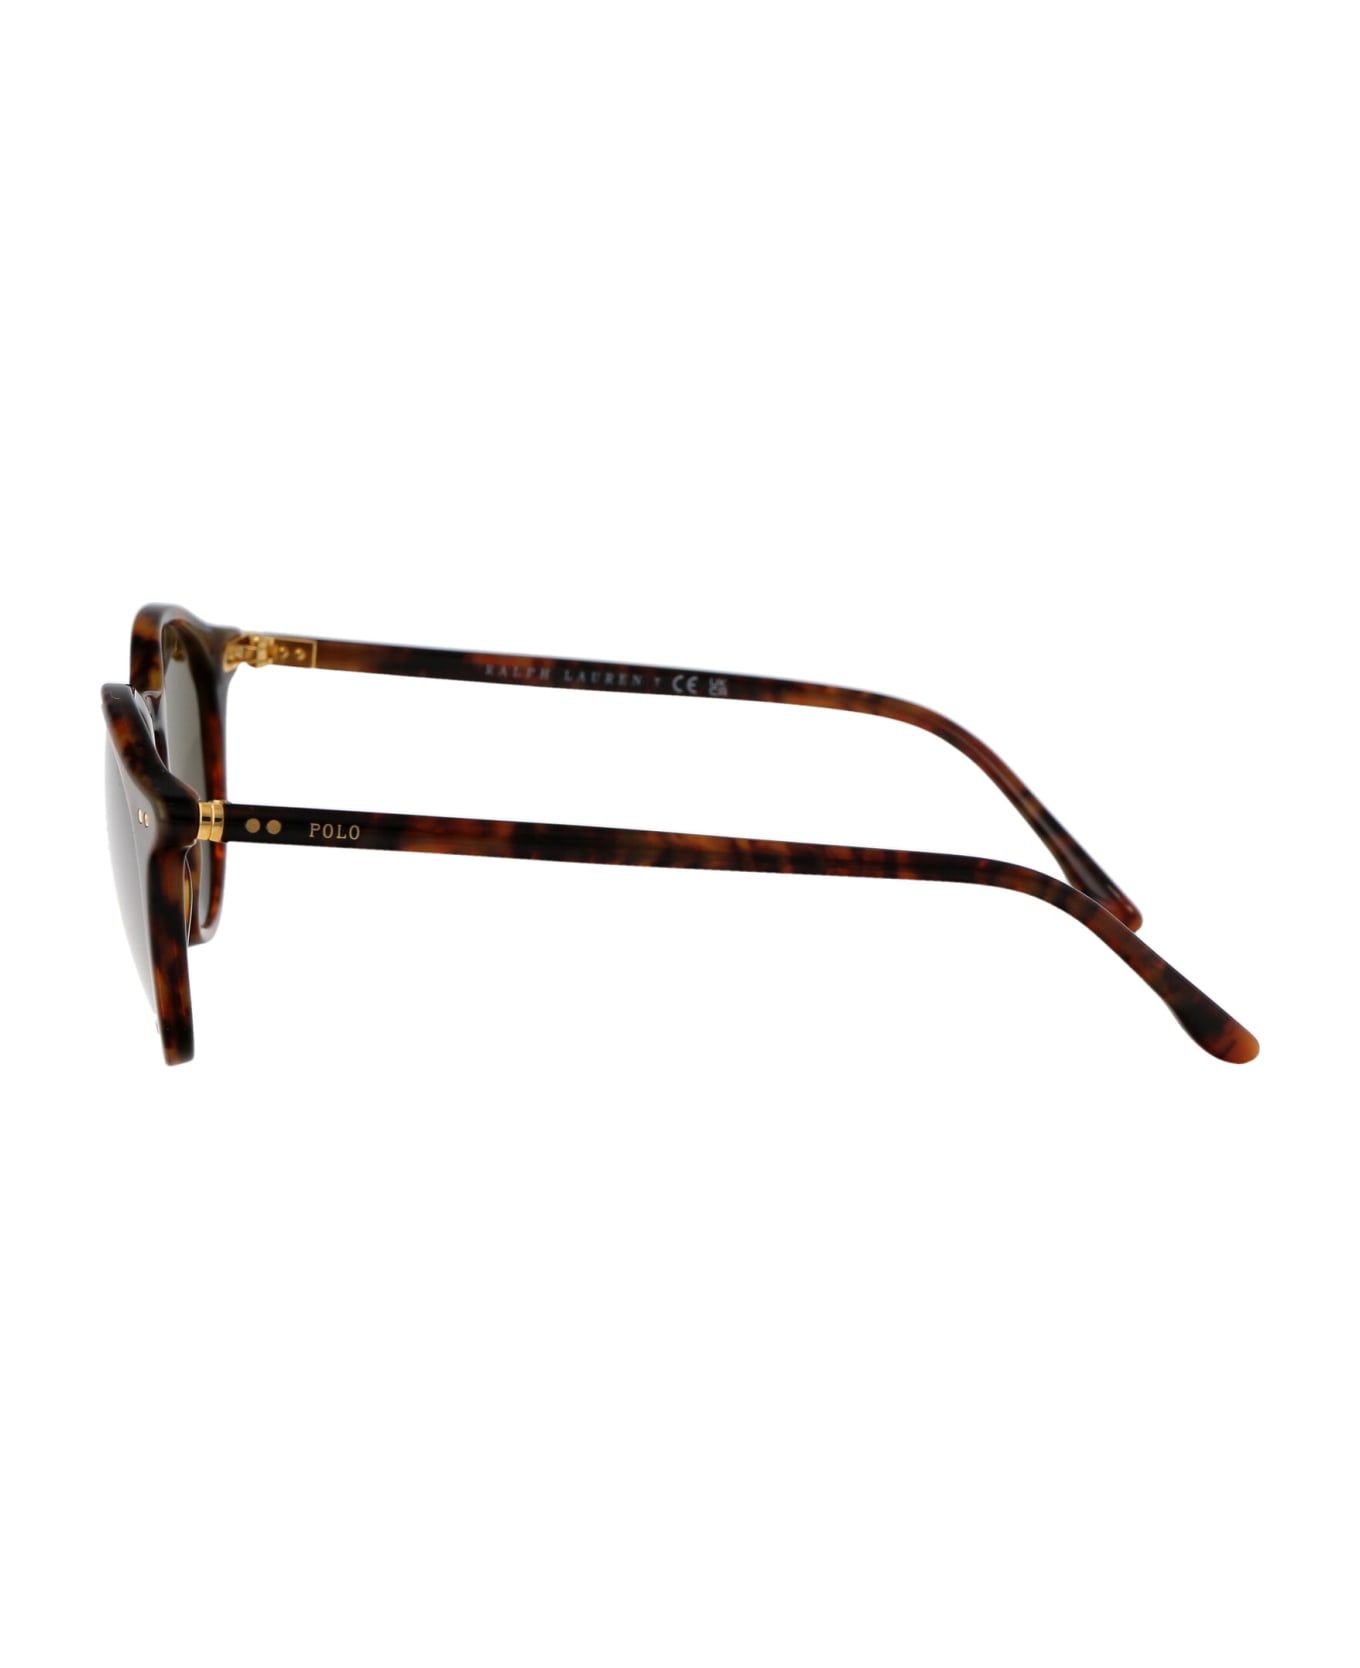 Polo Ralph Lauren 0ph4193 Sunglasses - 501773 Shiny Beige Tortoise